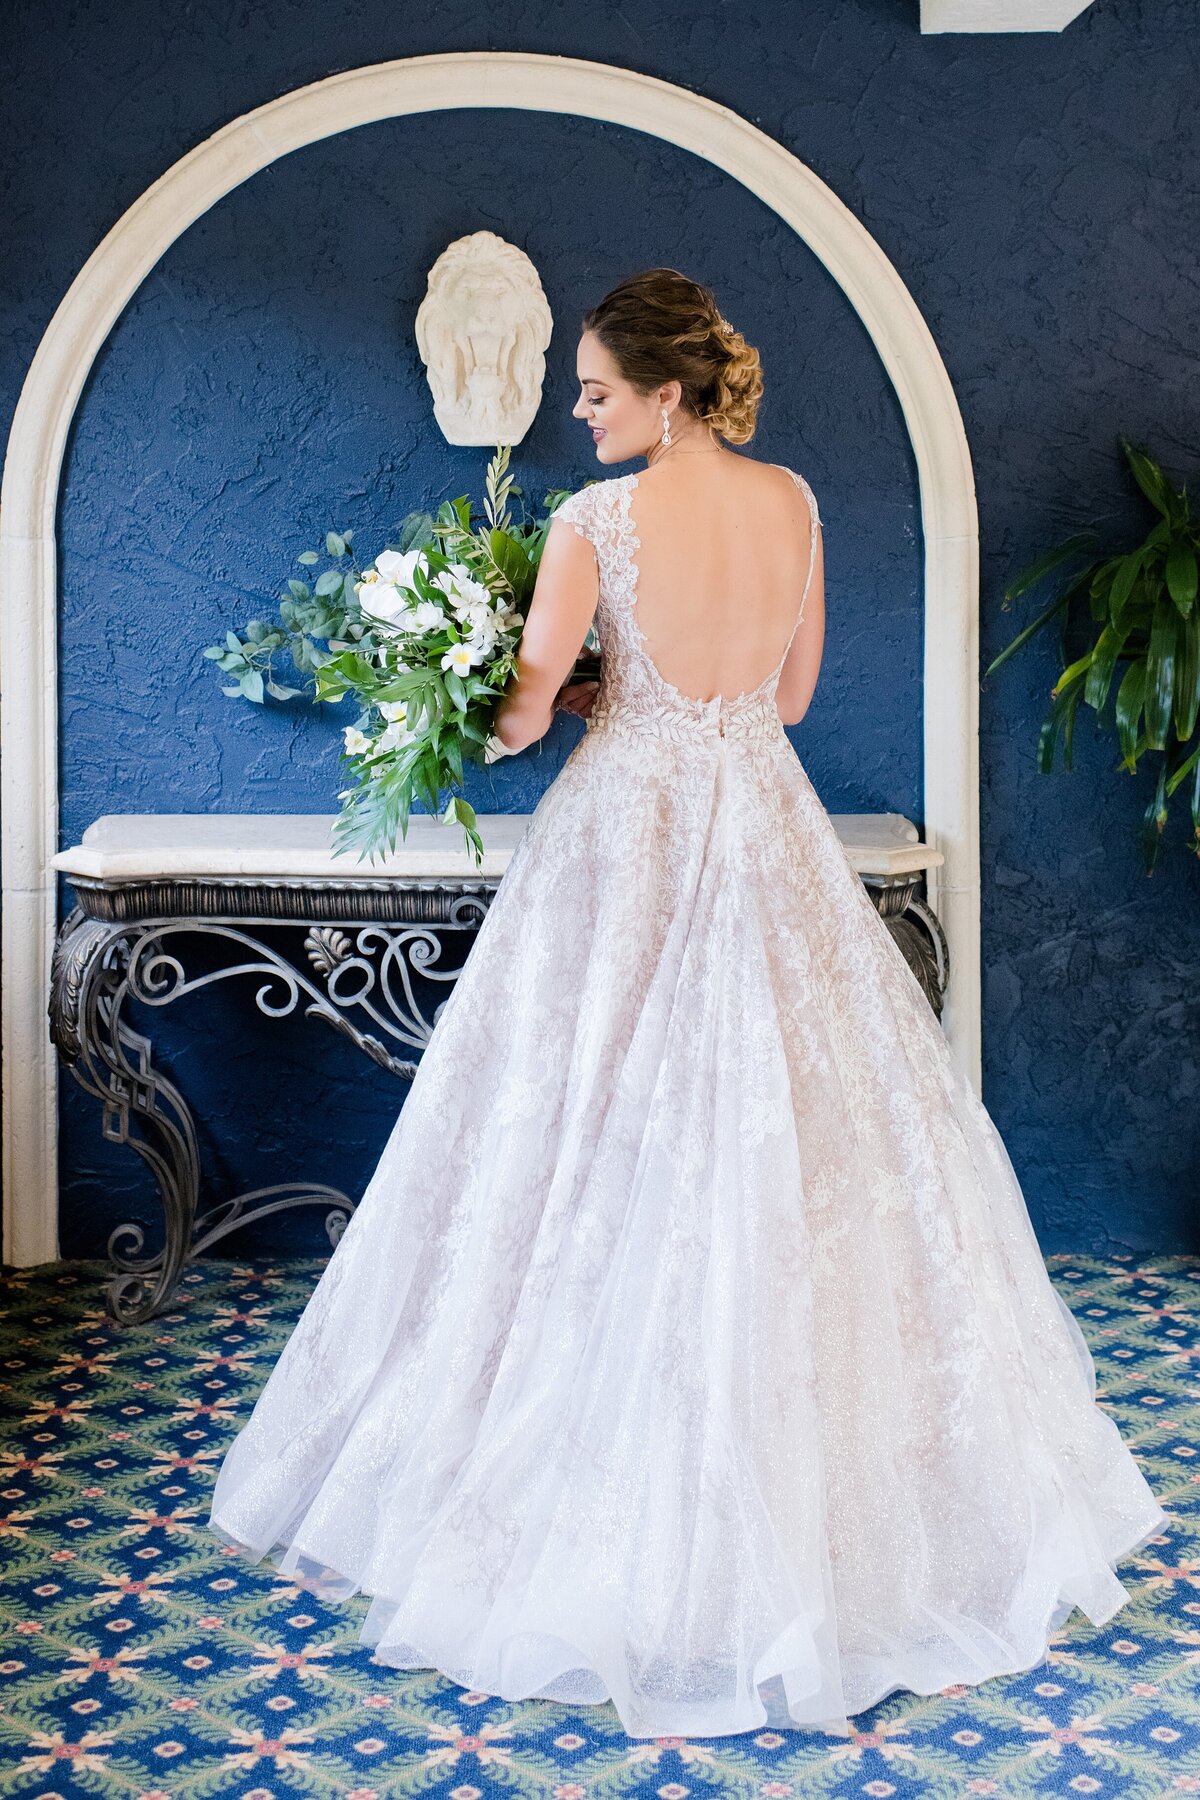 Bride in Wedding Dress | Mission Inn Wedding |  Chynna Pacheco Photography-3